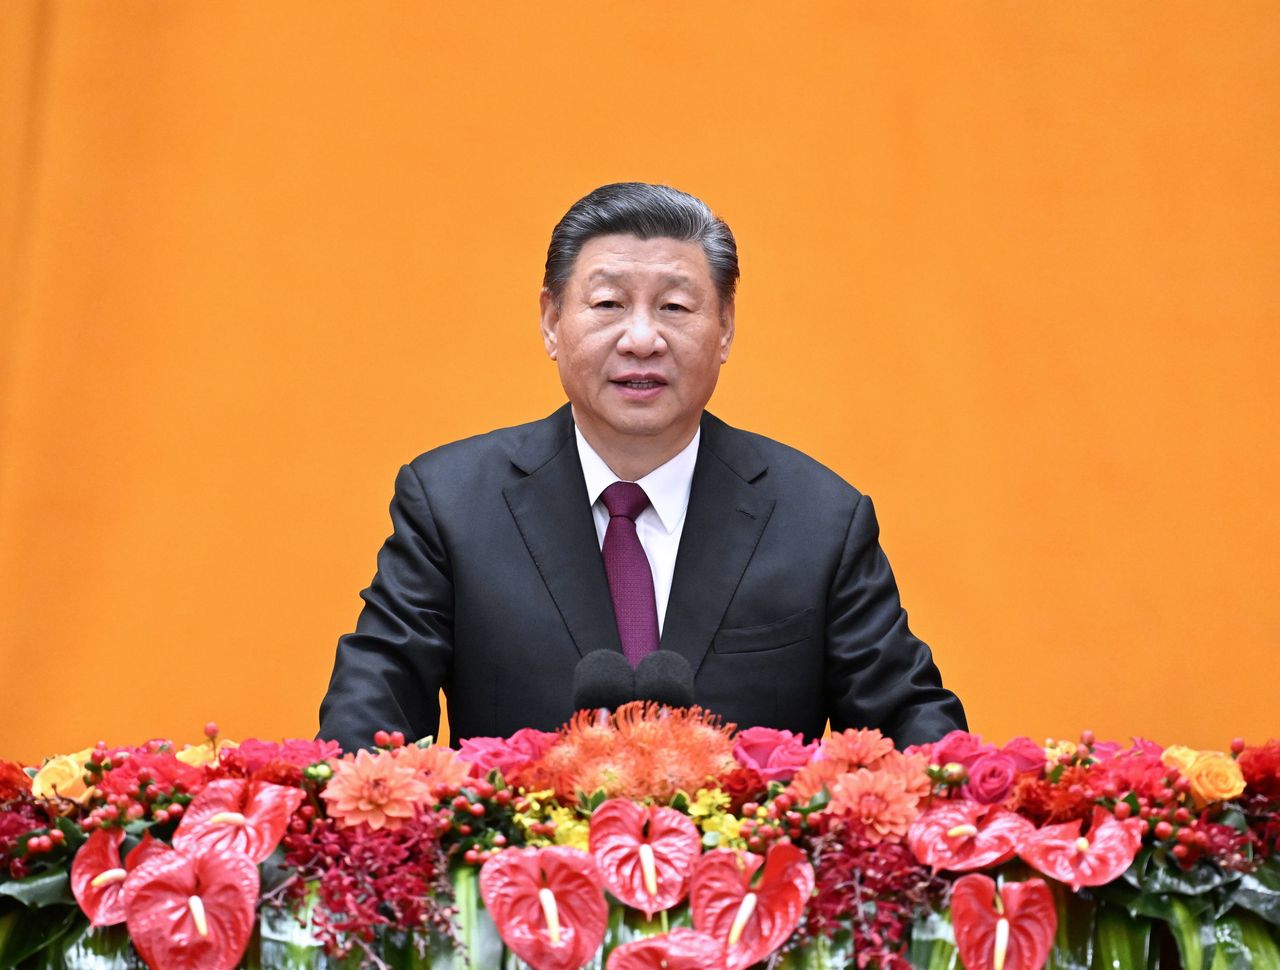 Chairman of the People's Republic of China Xi Jinping